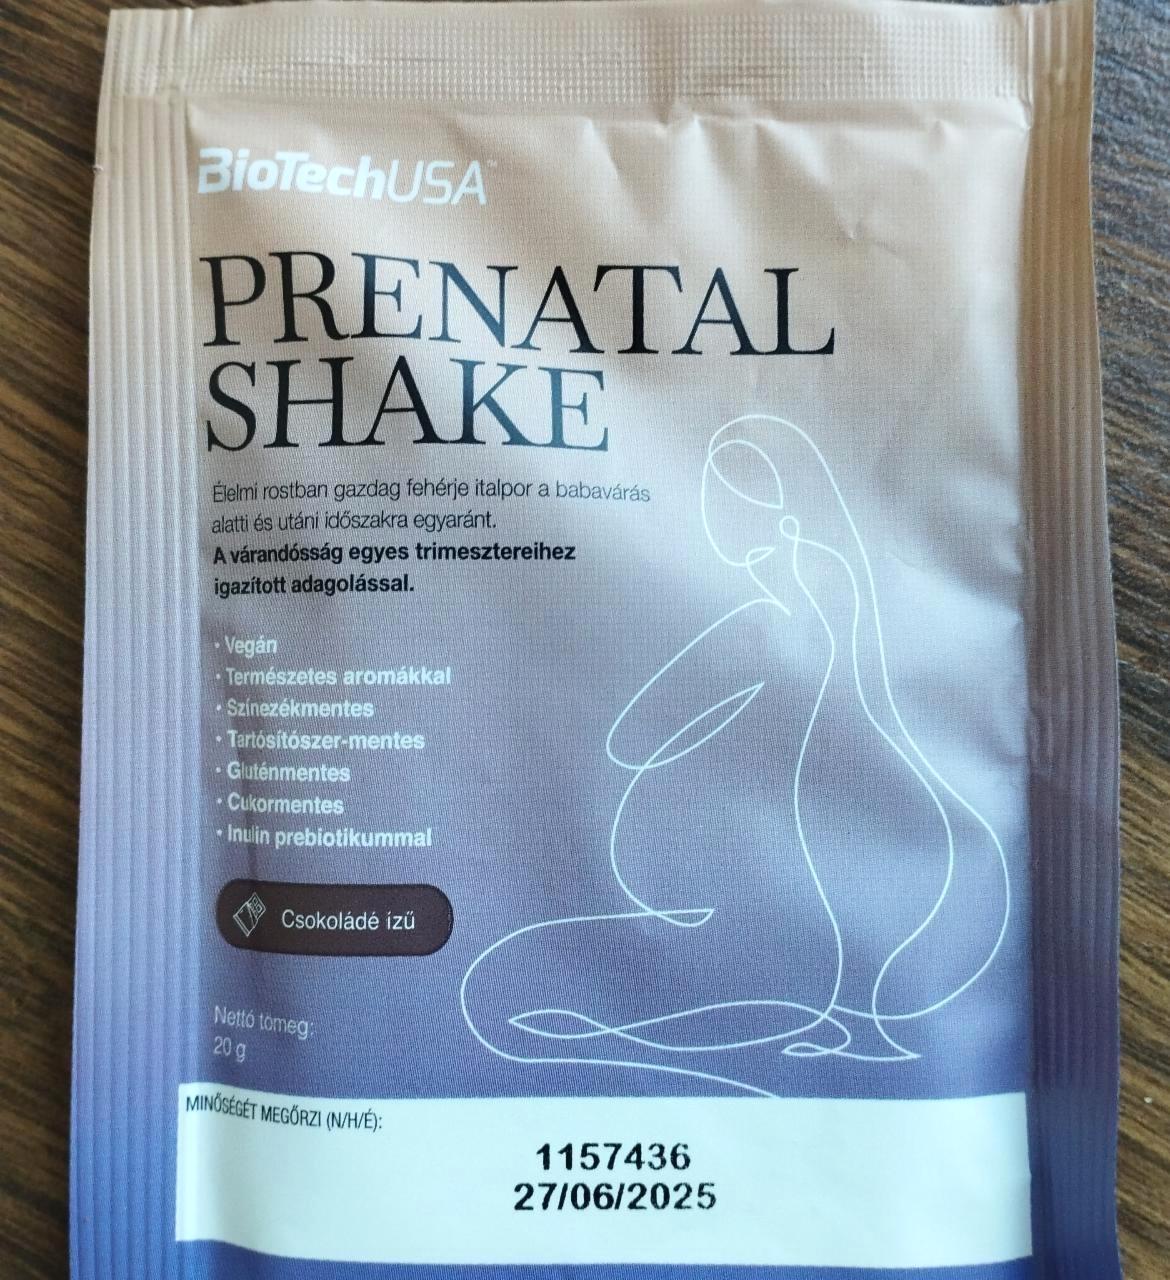 Képek - Prenatal shake csokoládé BioTechUSA